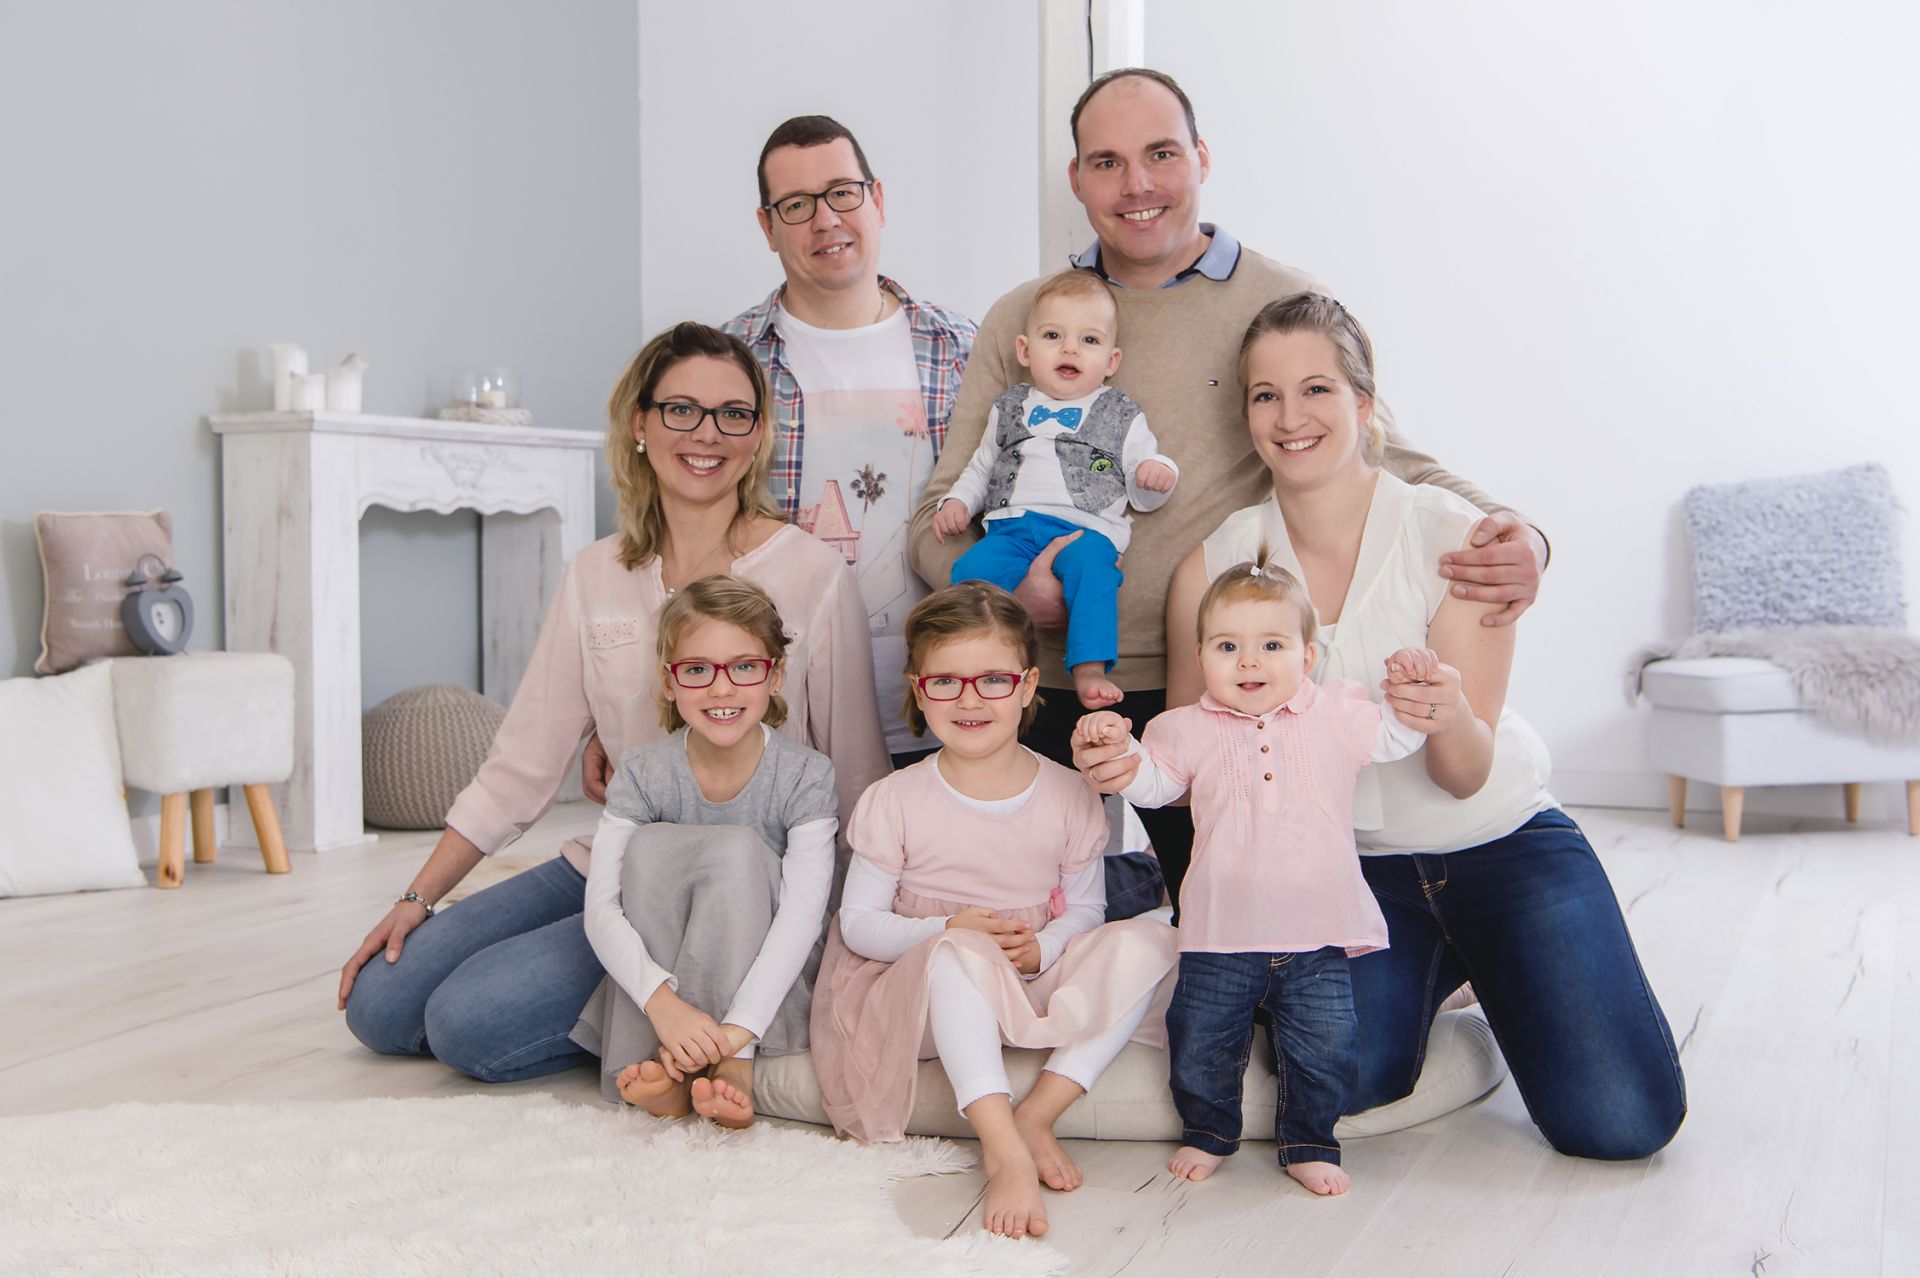 Familienfotos-Familienfotografie-Porträtfotografie-Fotografie-Katharina-Müller-Limburg-Eschhofen-www.fotografie-km.de-Indoor-und-Outdoor-Kinderfotografie